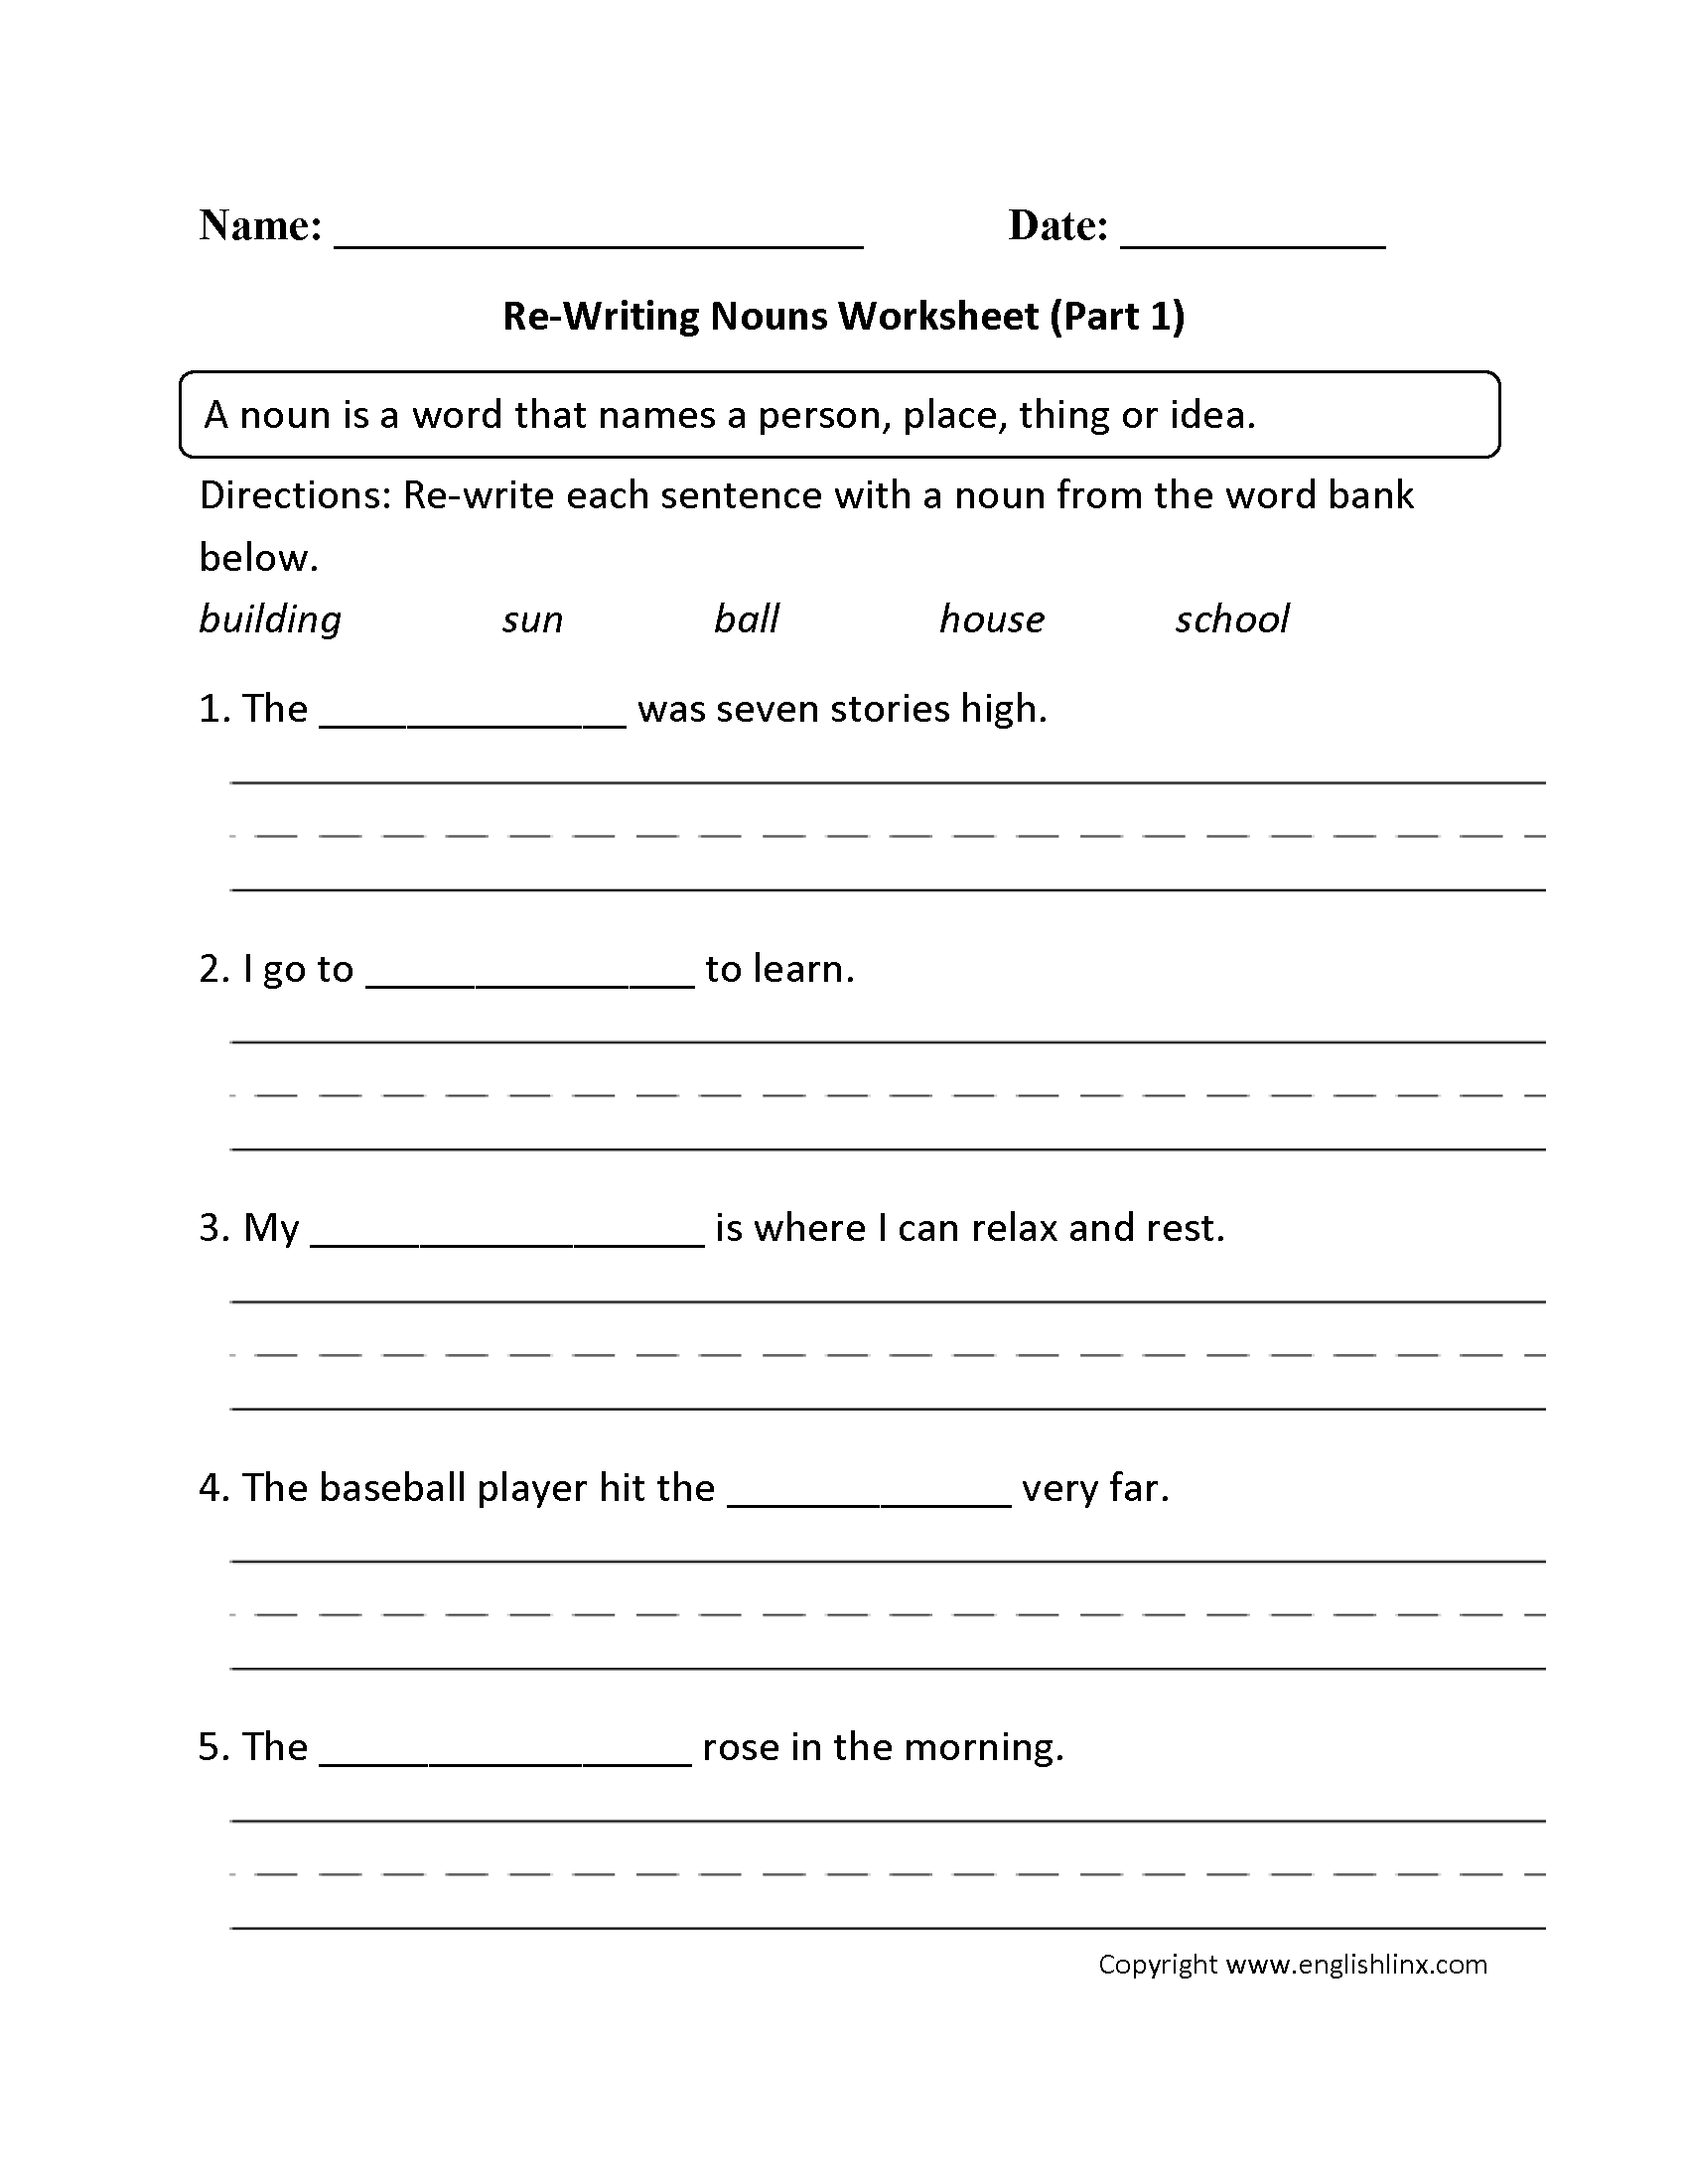 regular-nouns-worksheets-re-writing-nouns-worksheet-part-1